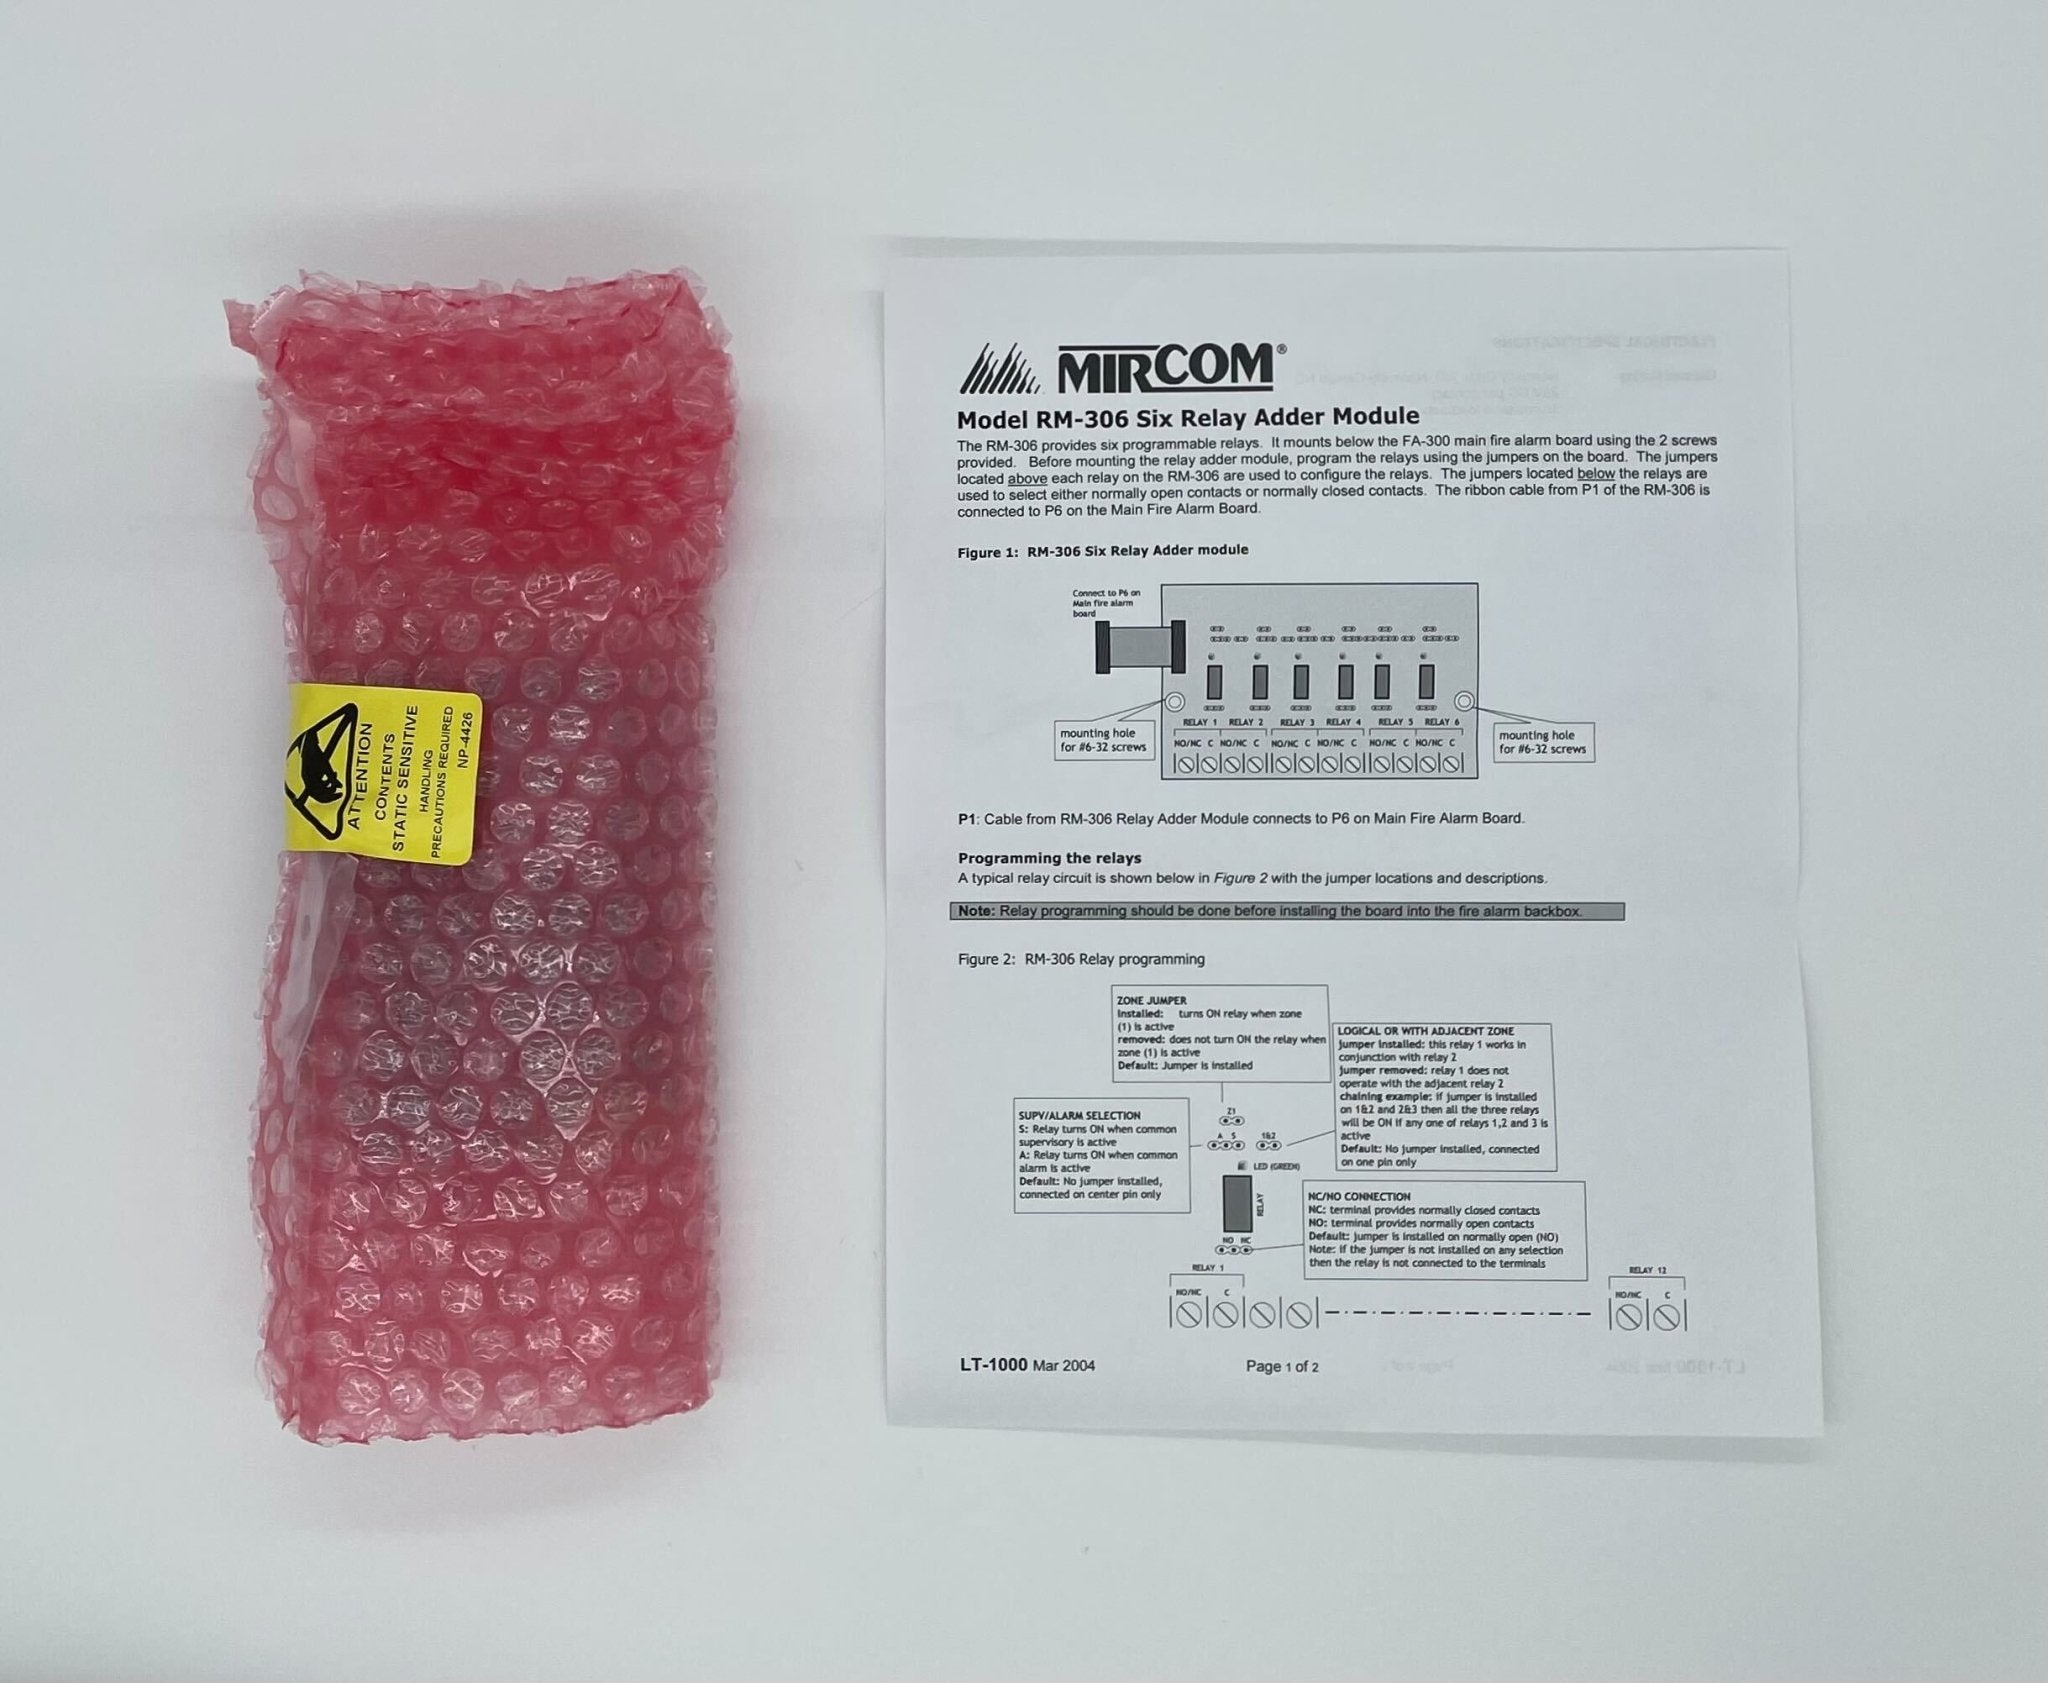 Mircom RM-306 Series 300 Relay Adder - The Fire Alarm Supplier